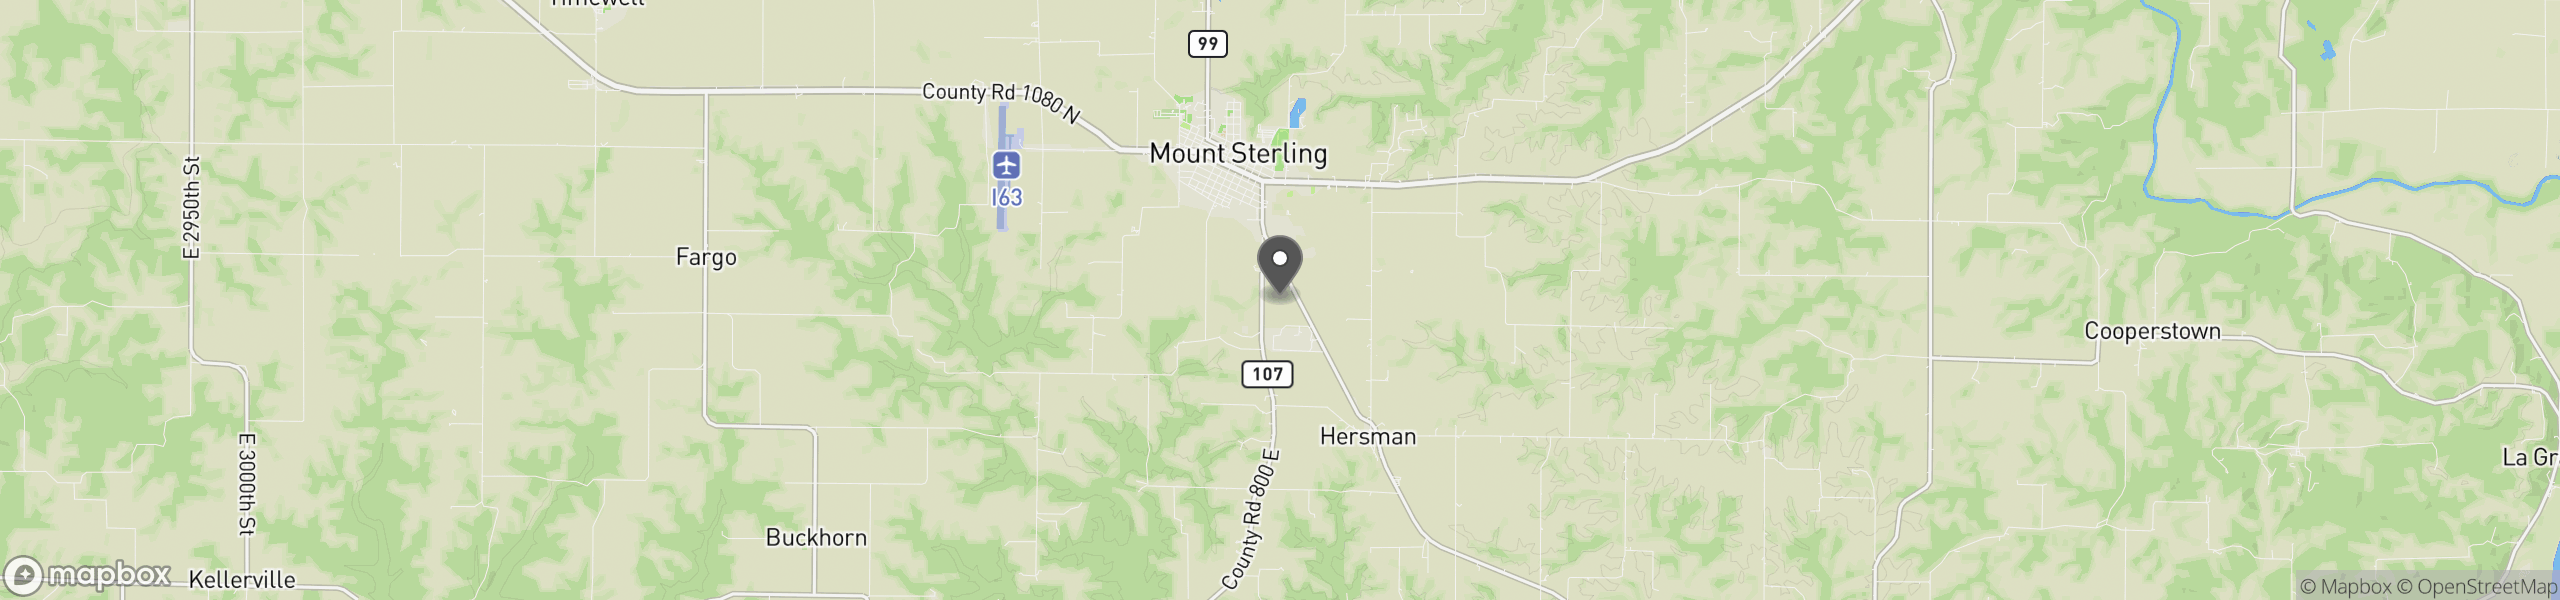 Mount Sterling, IL